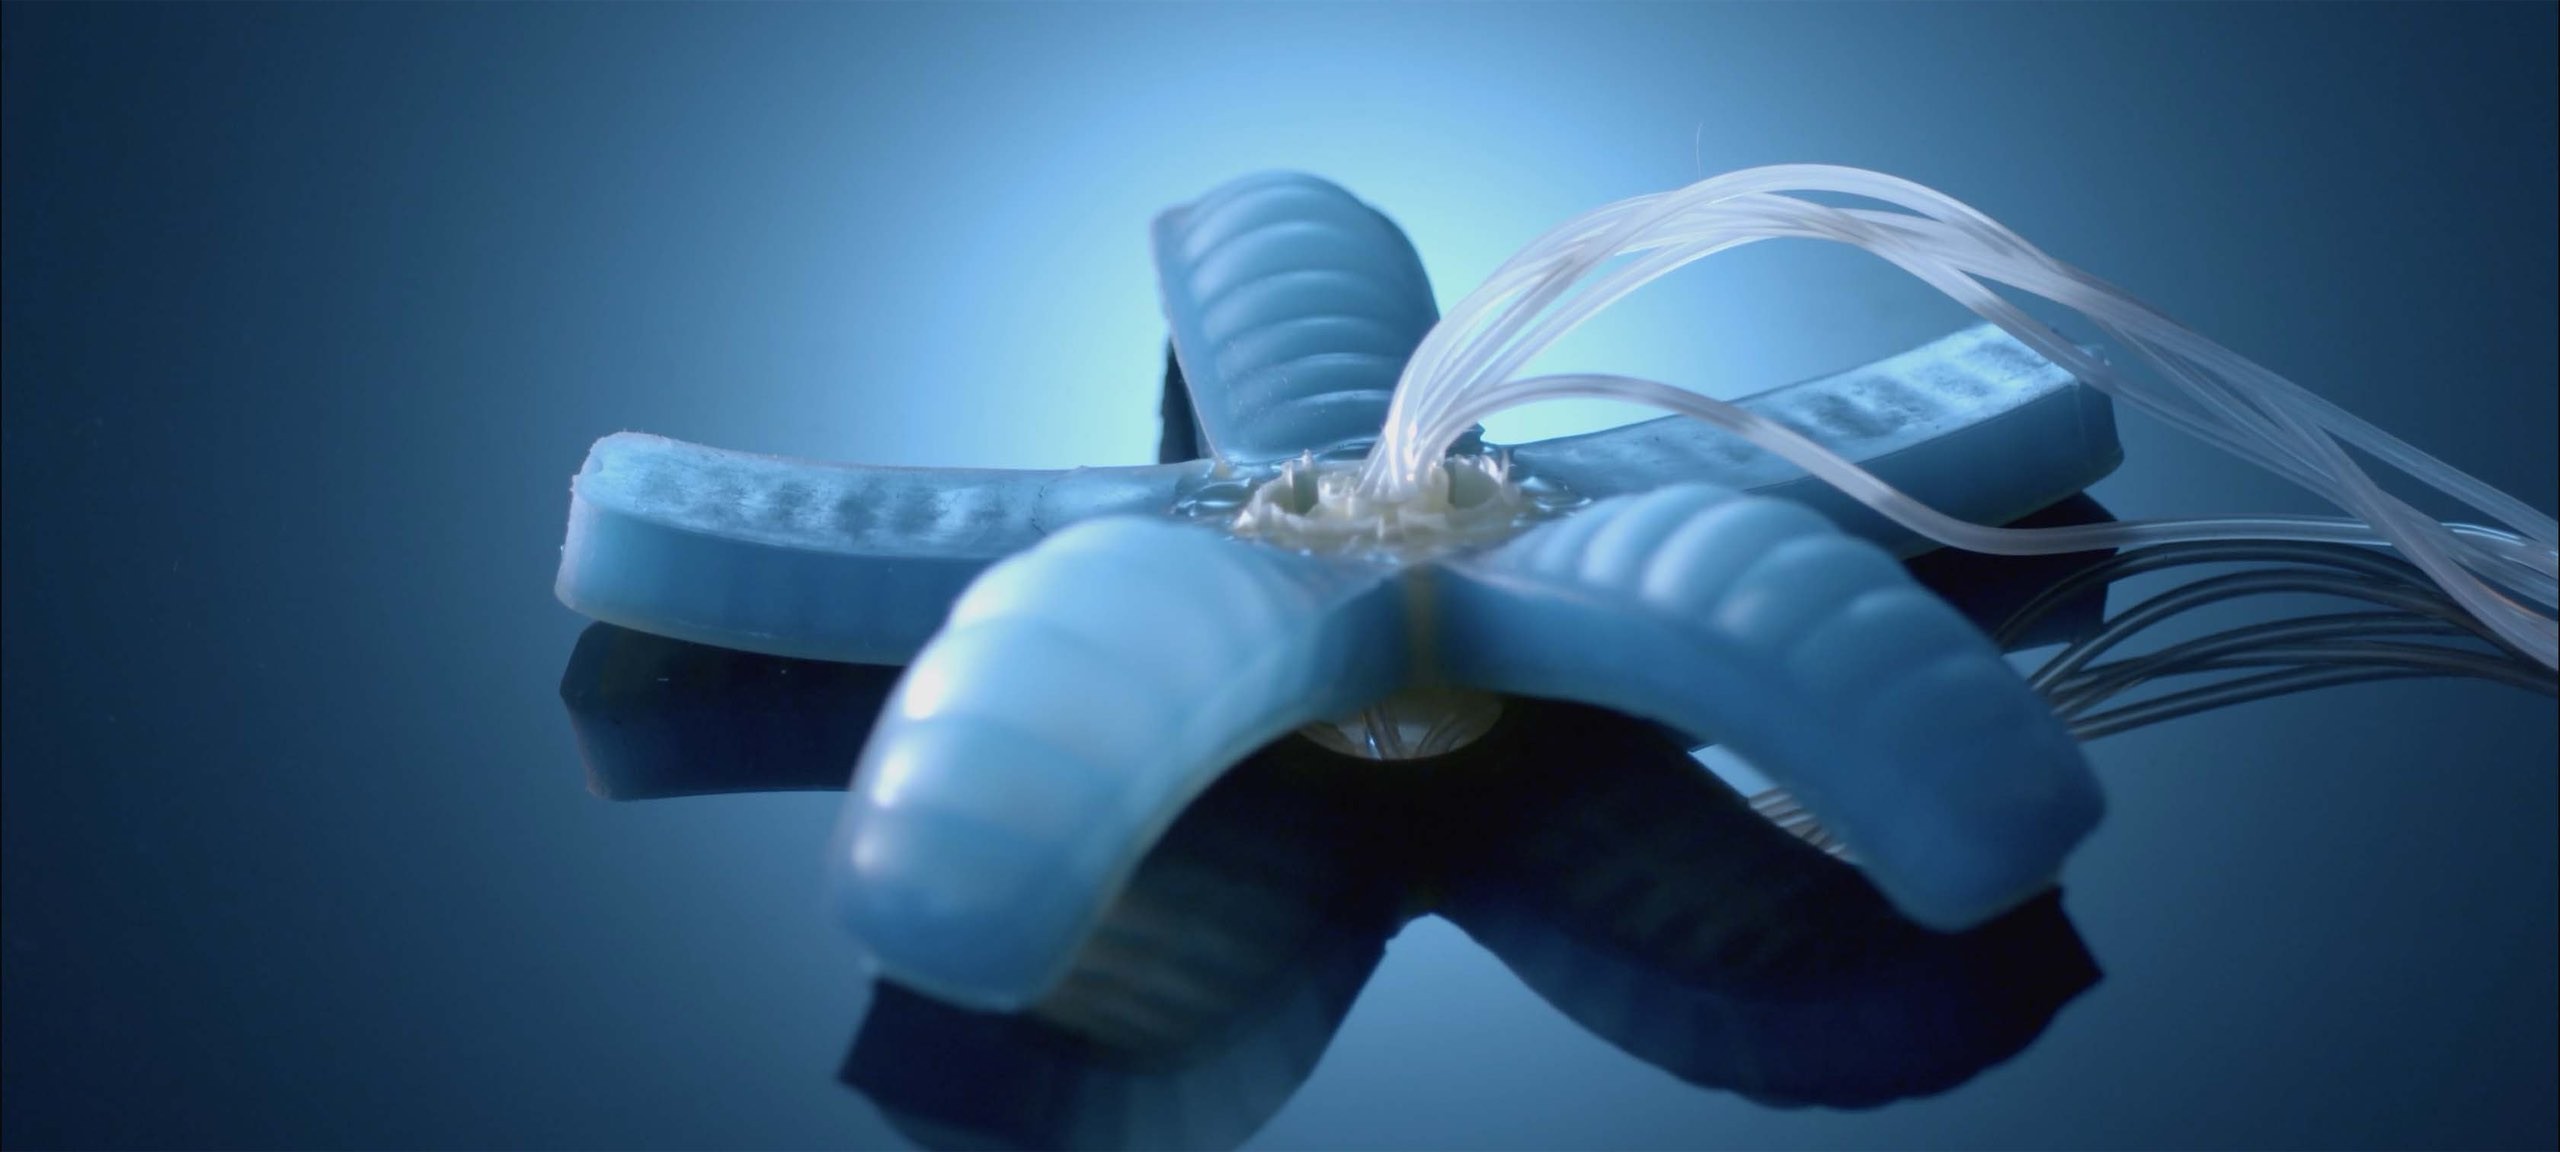 Soft robotic octopus in blue hues.jpg